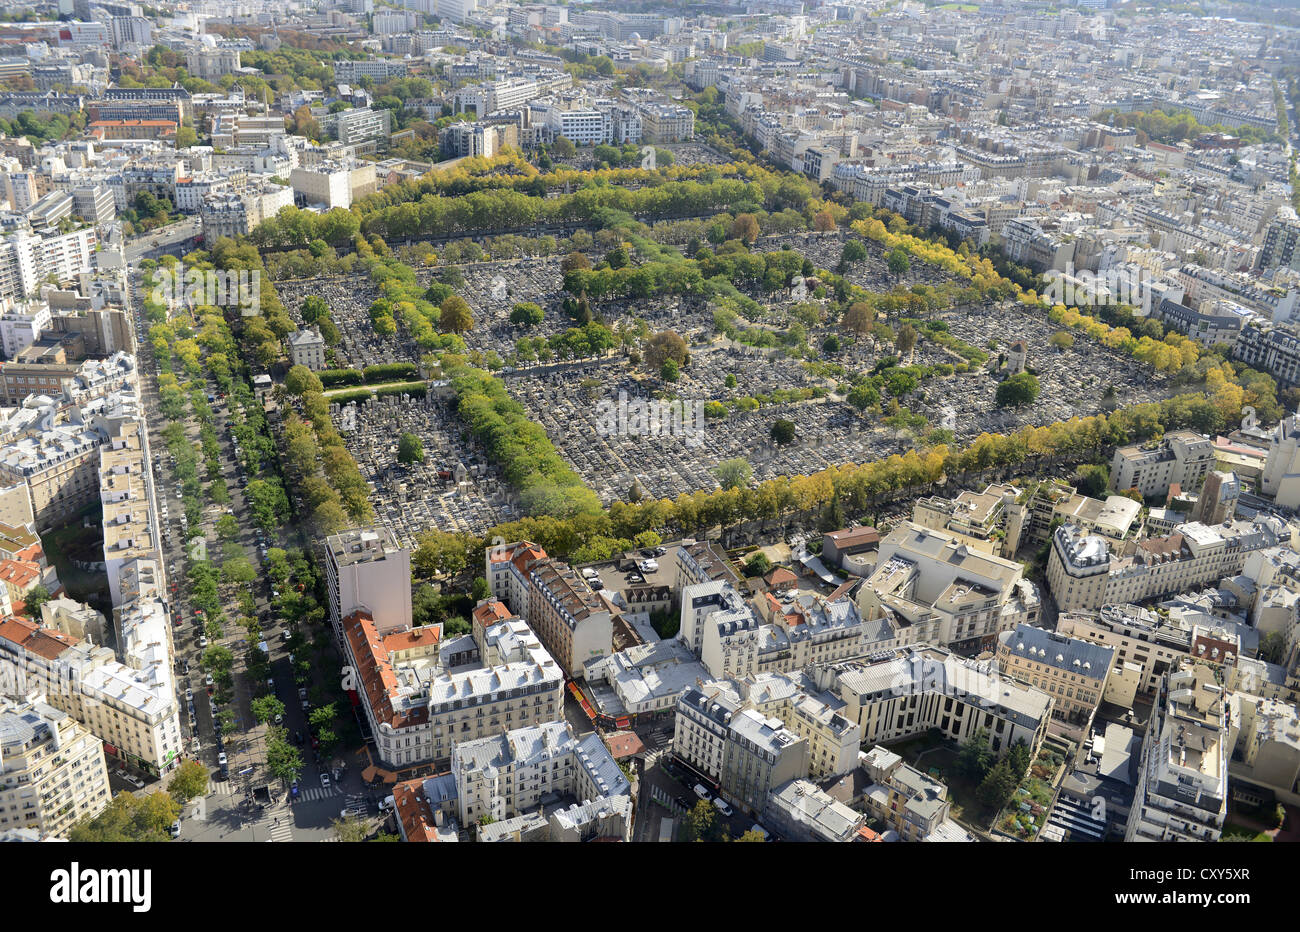 "Cimitero ontparnasse', Vista aerea del cimitero, Parigi, Francia Foto Stock